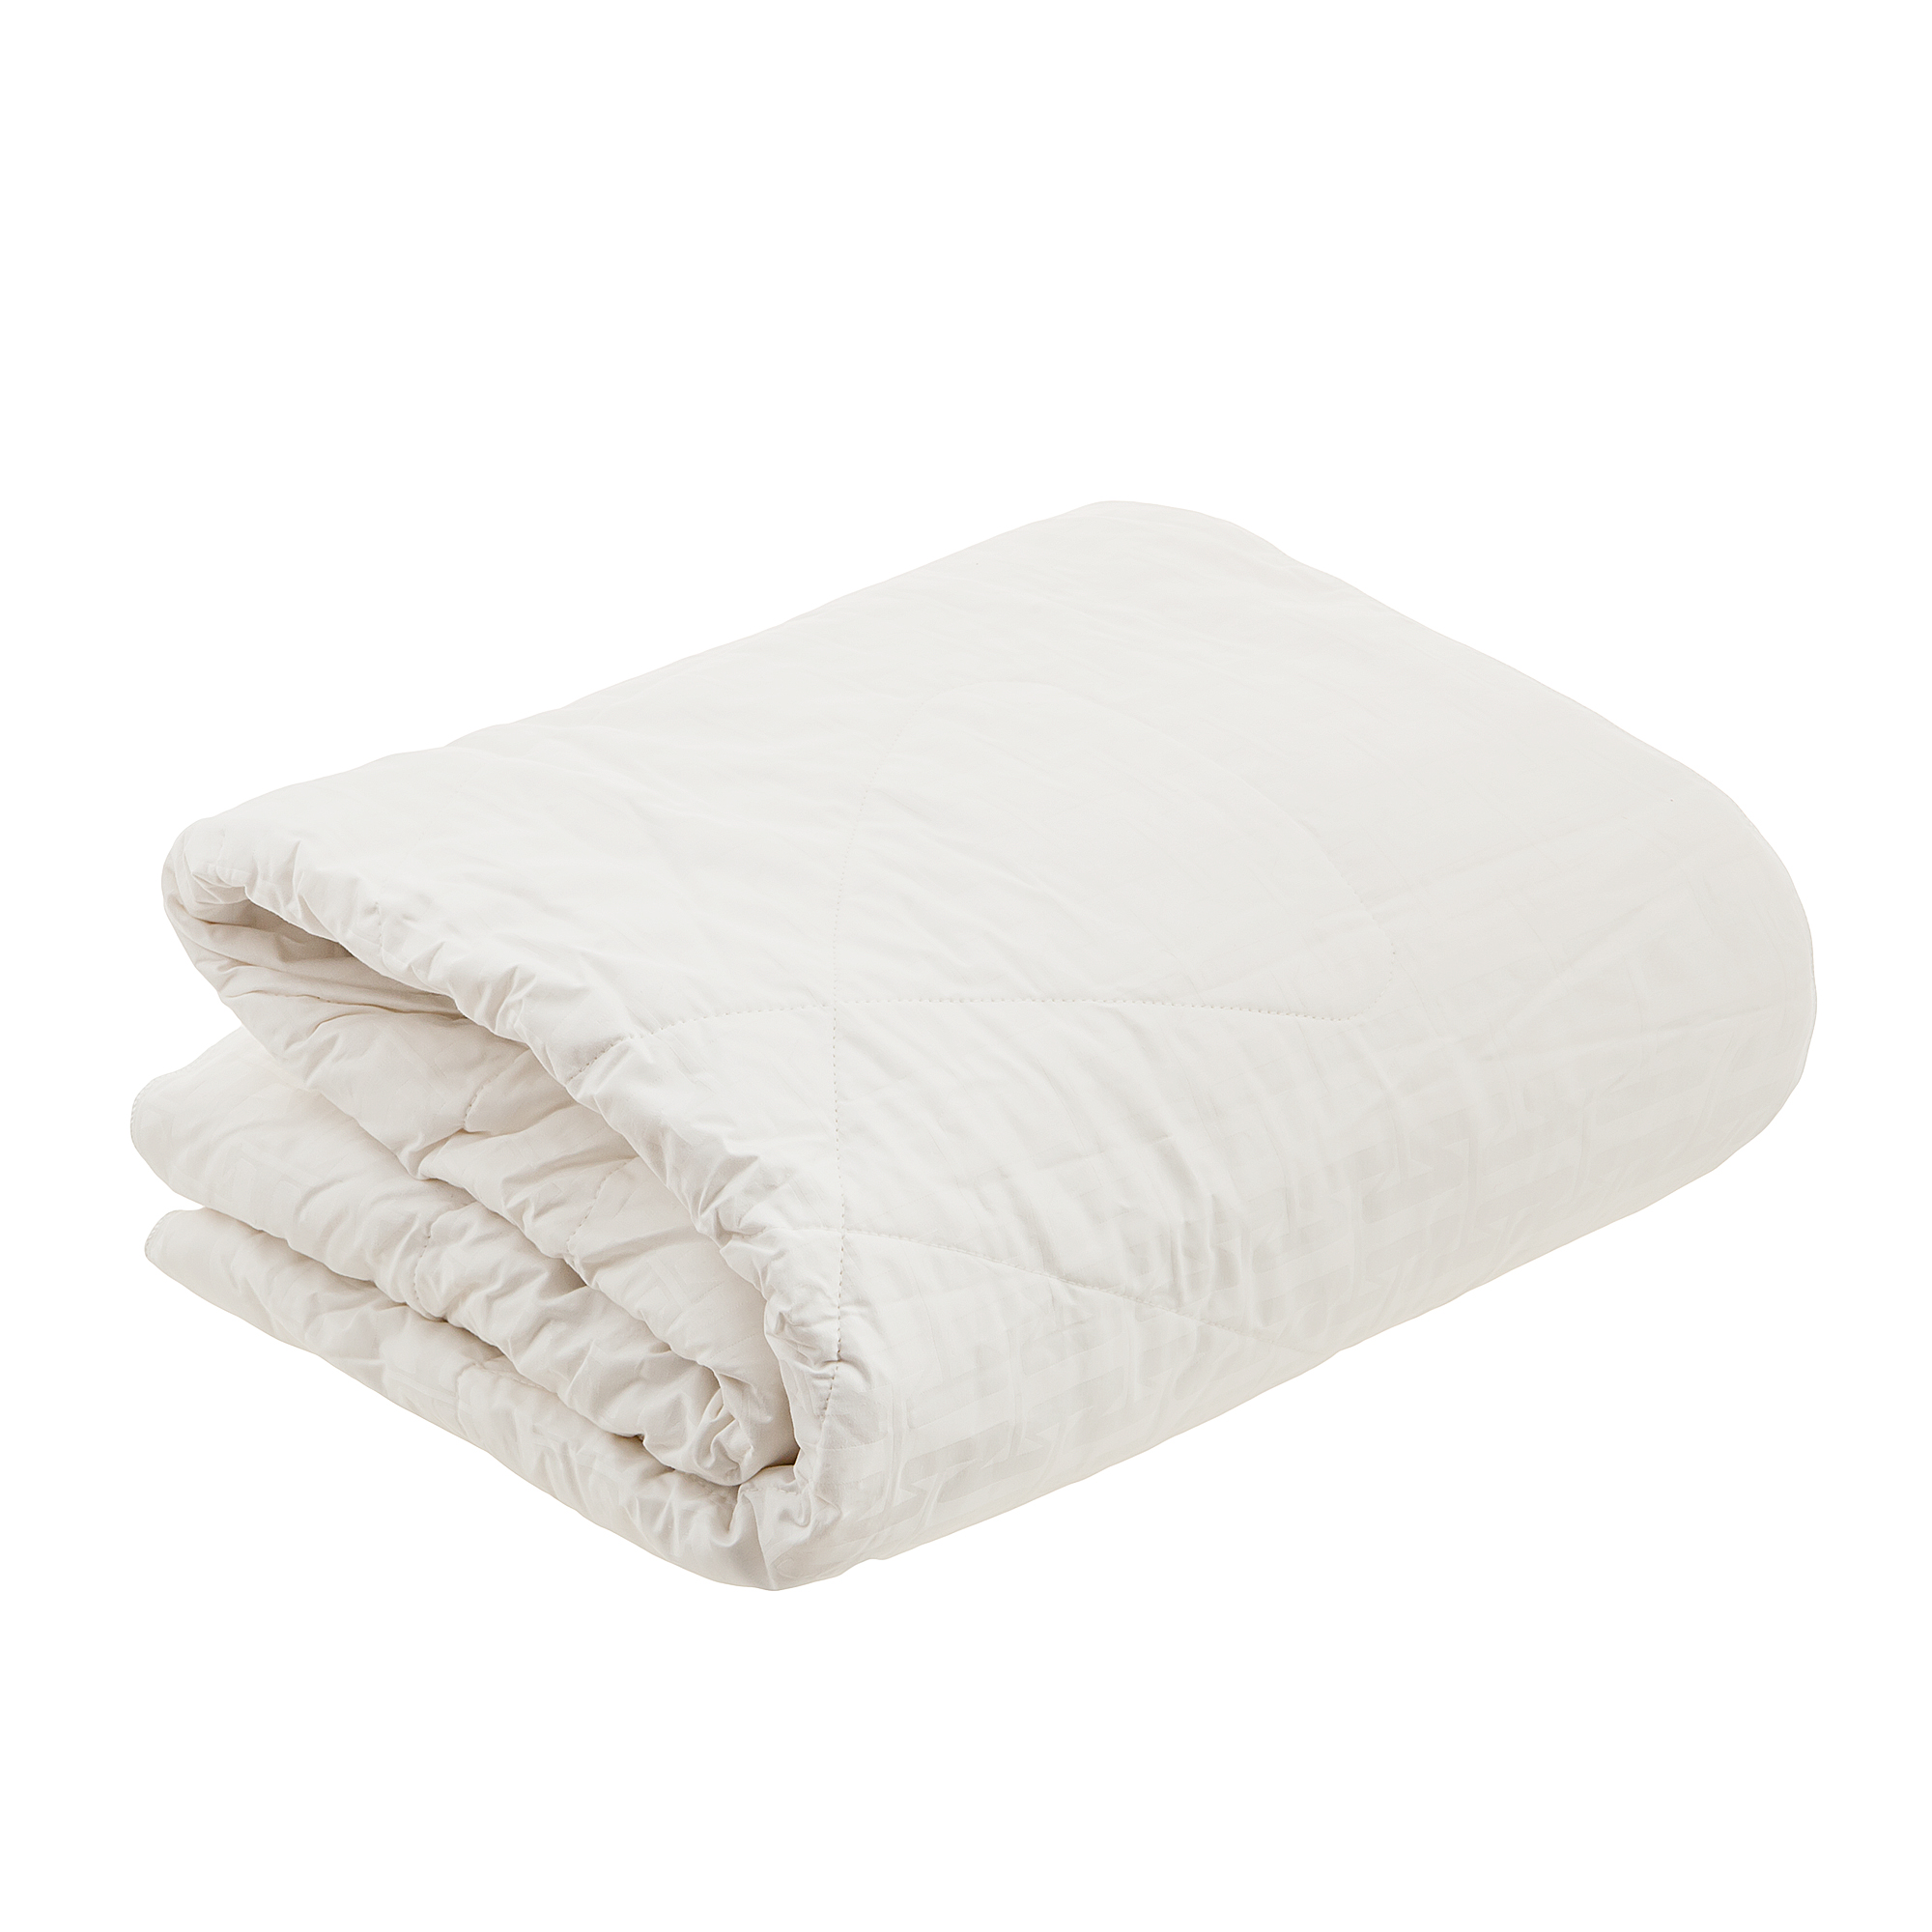 Одеяло Селена Лайт Togas 140х200 одеяло togas лира белое 140х200 см 20 04 17 0091